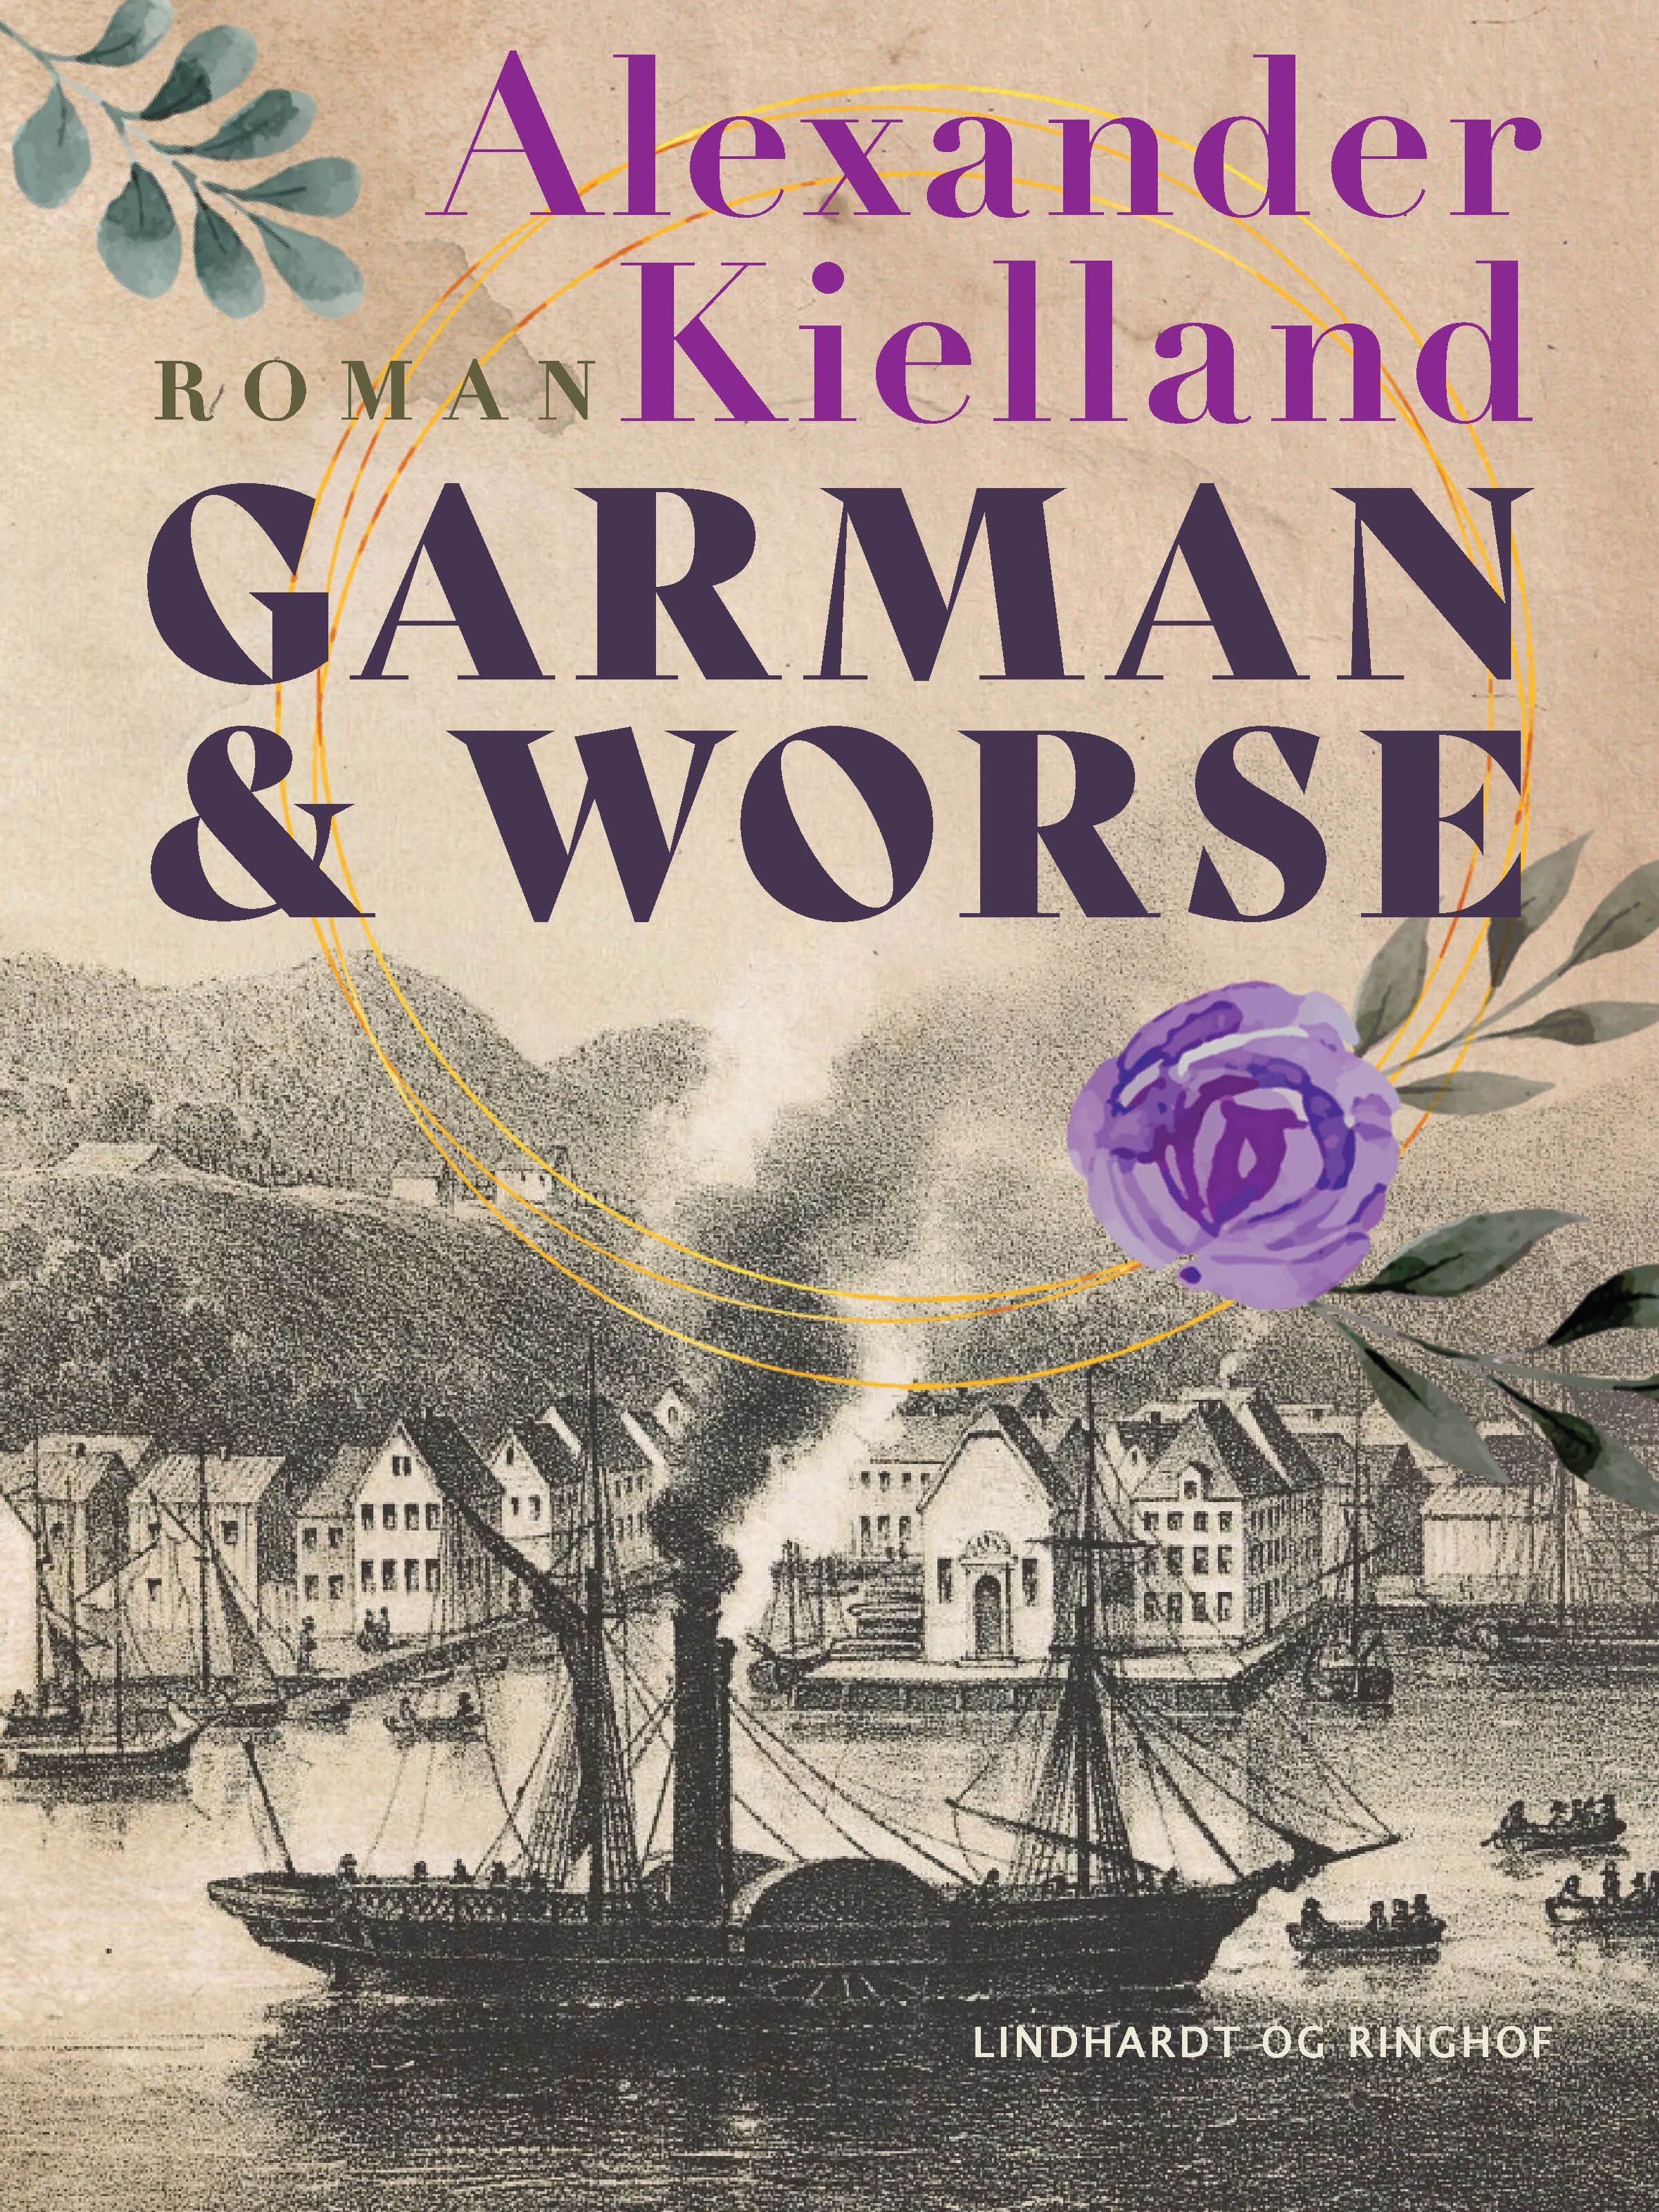 Garman & Worse, eBook by Alexander Kielland